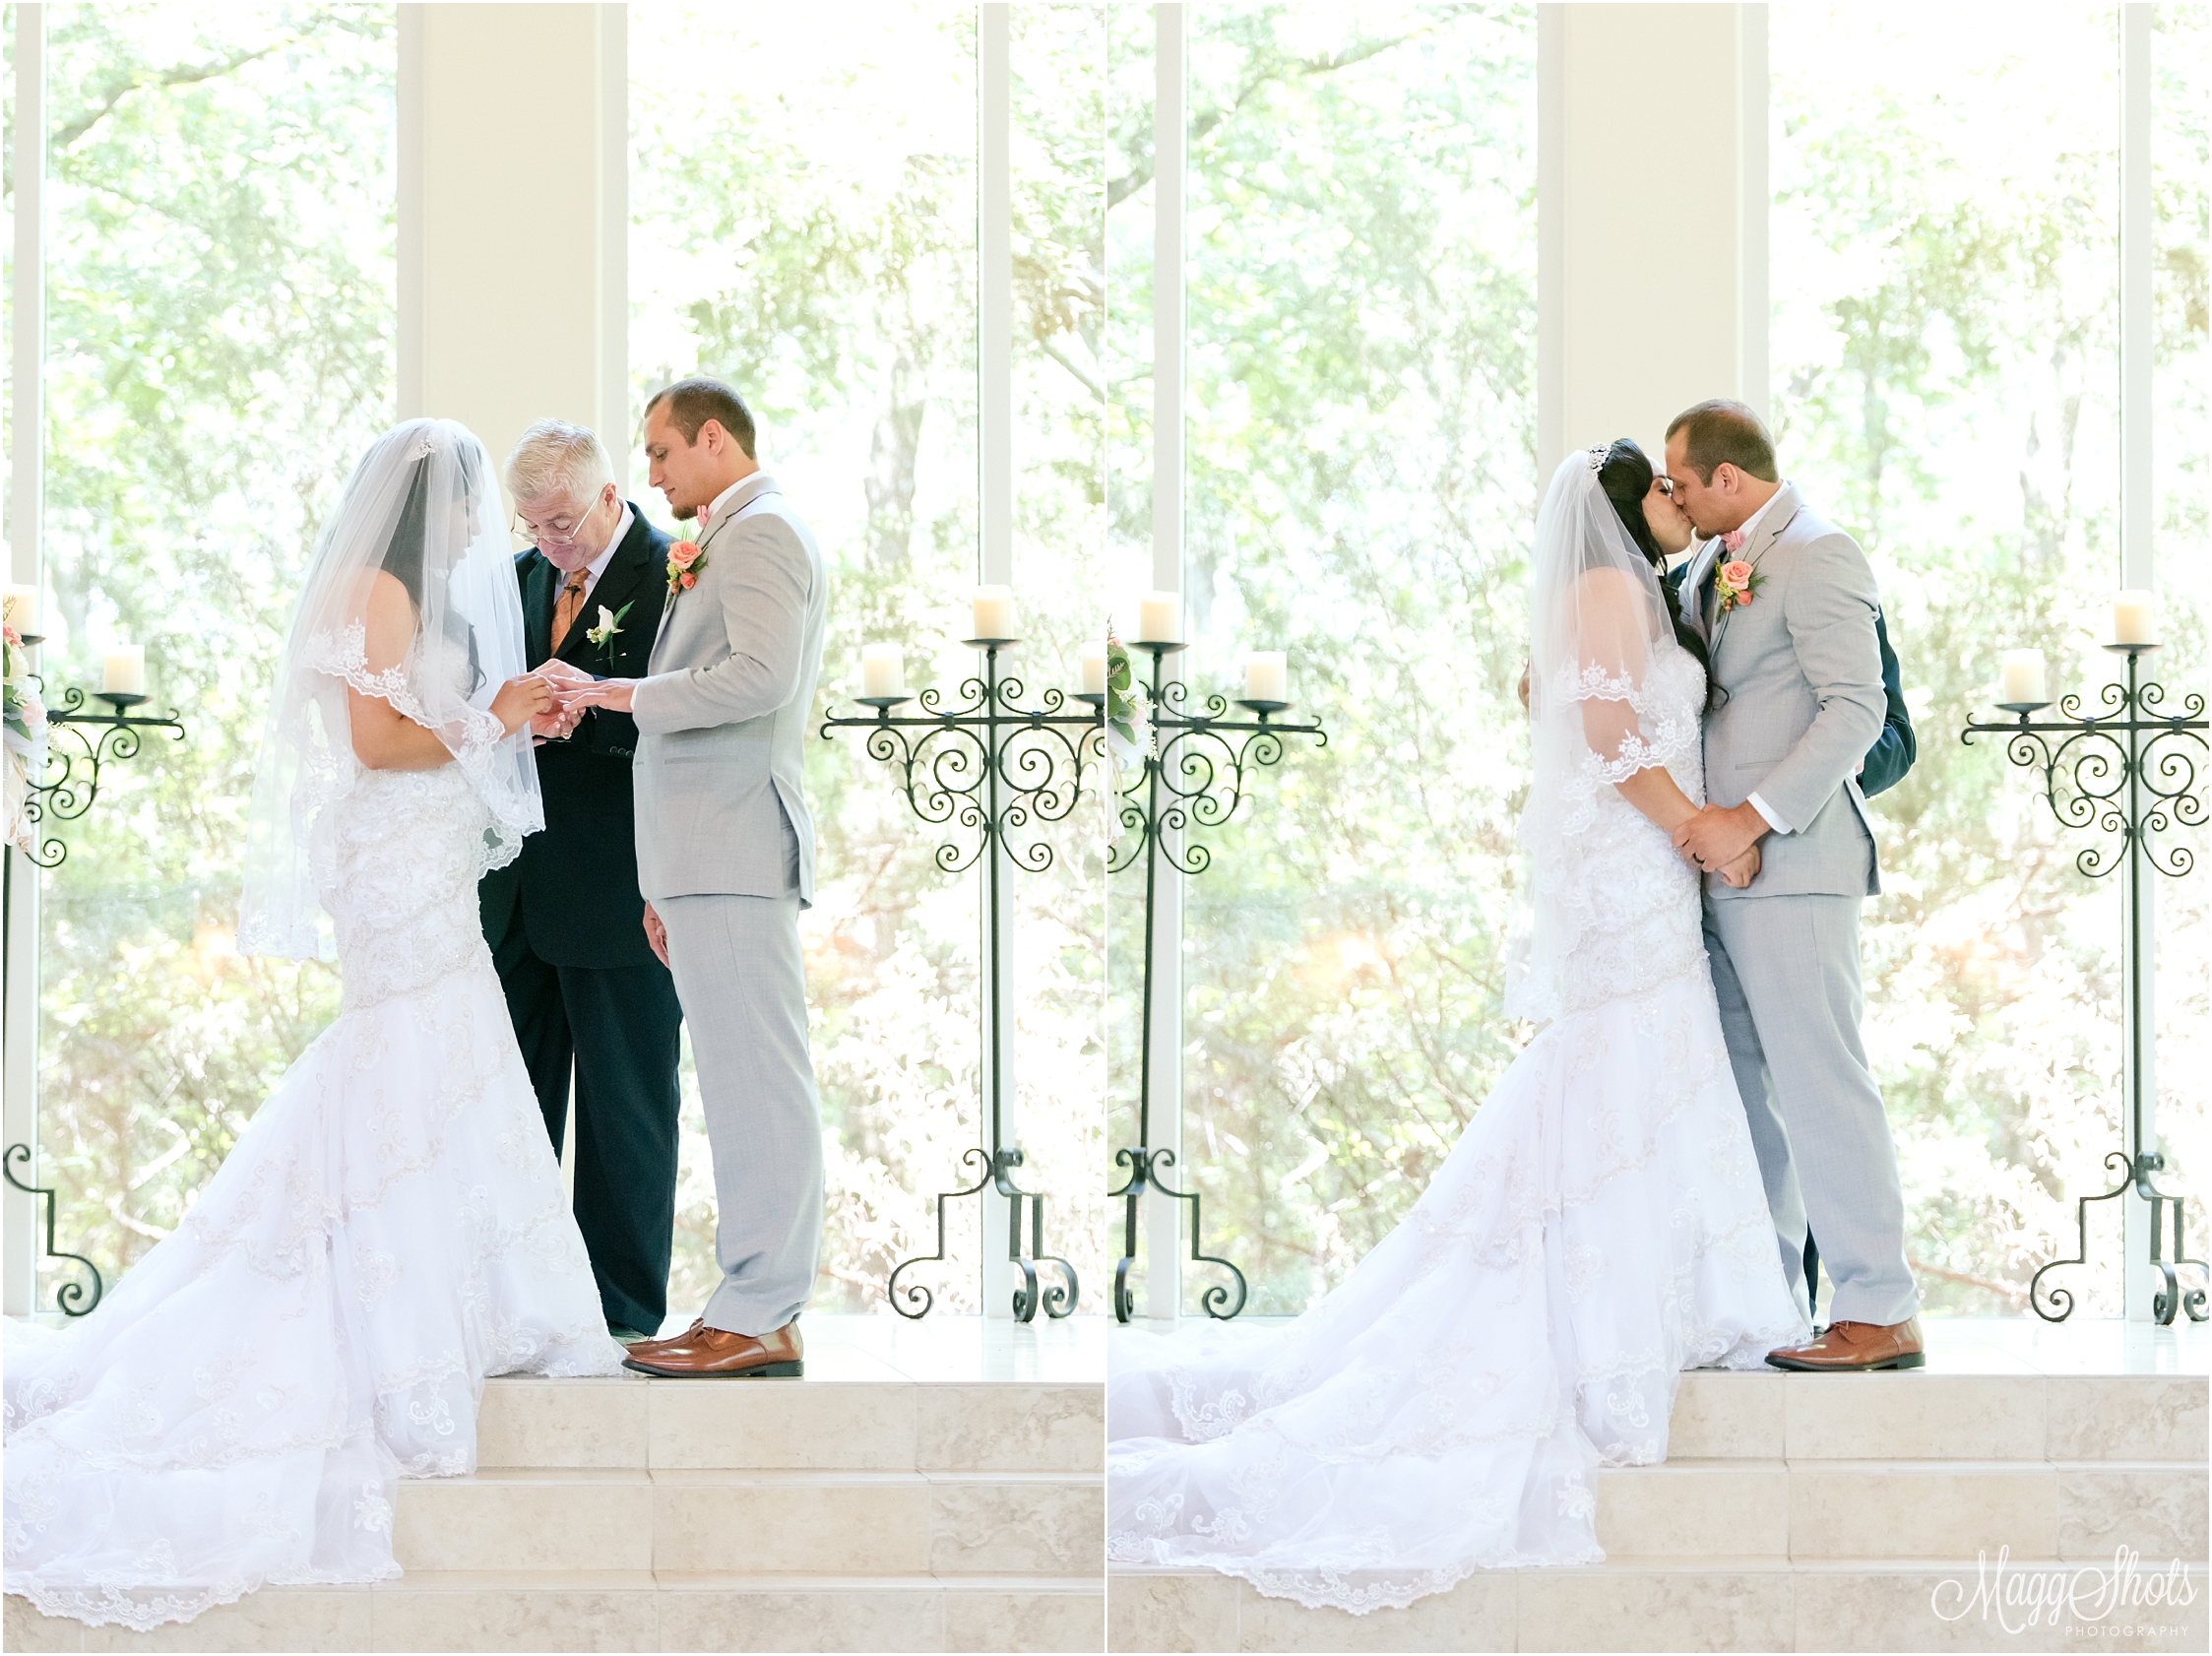 Kiss Husband and Wife Bride and Groom Ashton Gardens Wedding DFW Wedding Photographer Professional Photographer MaggShots Photographer MaggShots